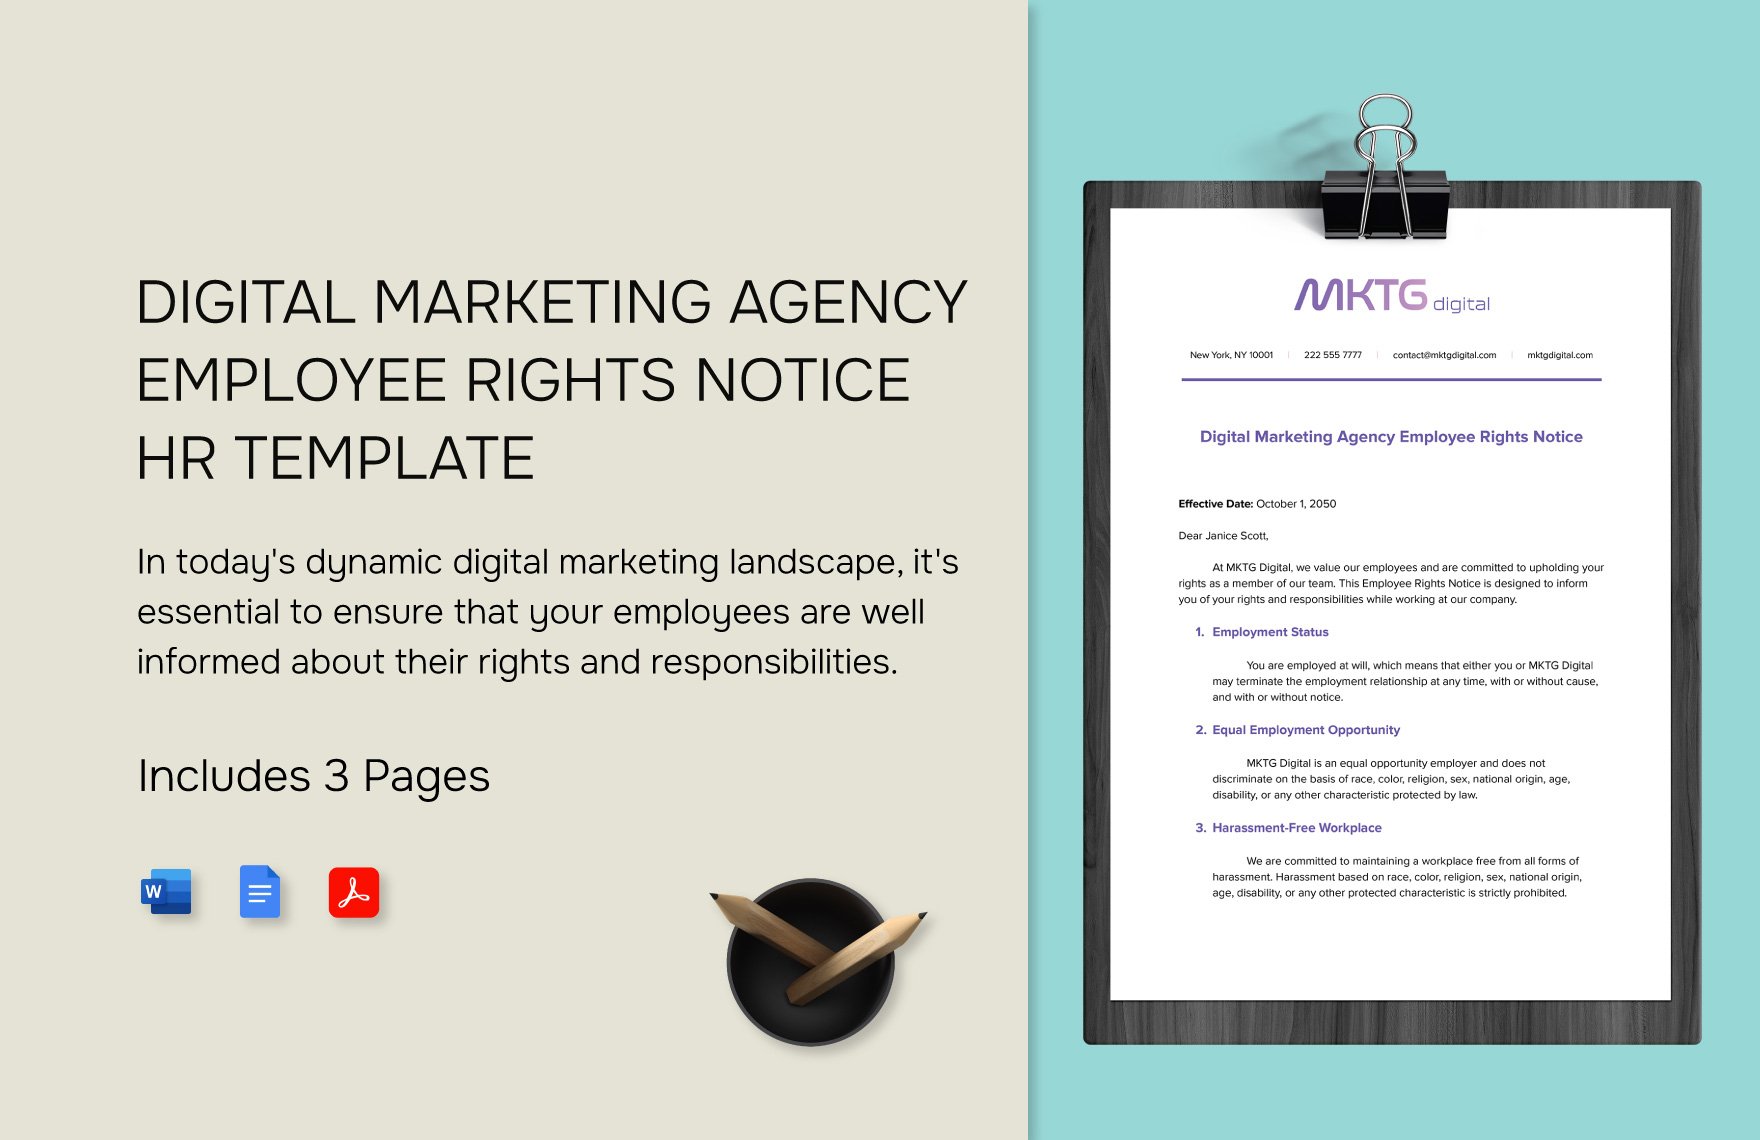 Digital Marketing Agency Employee Rights Notice HR Template in Word, Google Docs, PDF